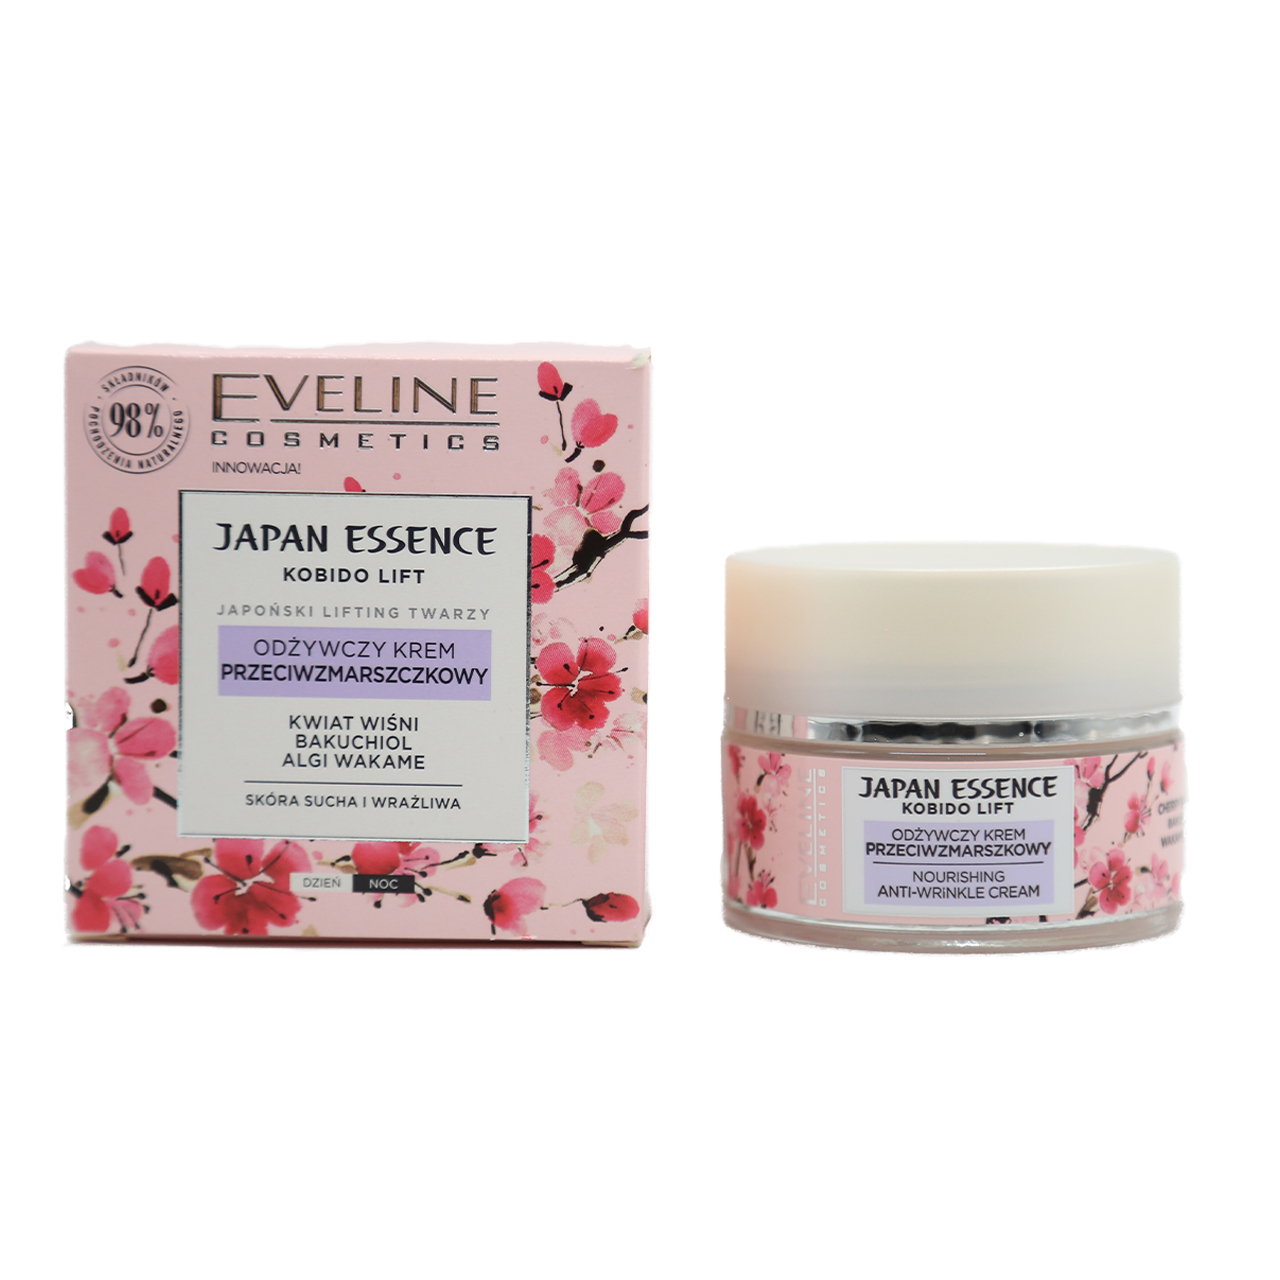 190-5903416035398-Eveline Cosmetics Japan Essence Kobido Lift Nourishing Anti- Wrinkle Cream with Cherry Blossom Bakuchiol and Wakame Algae 50ml